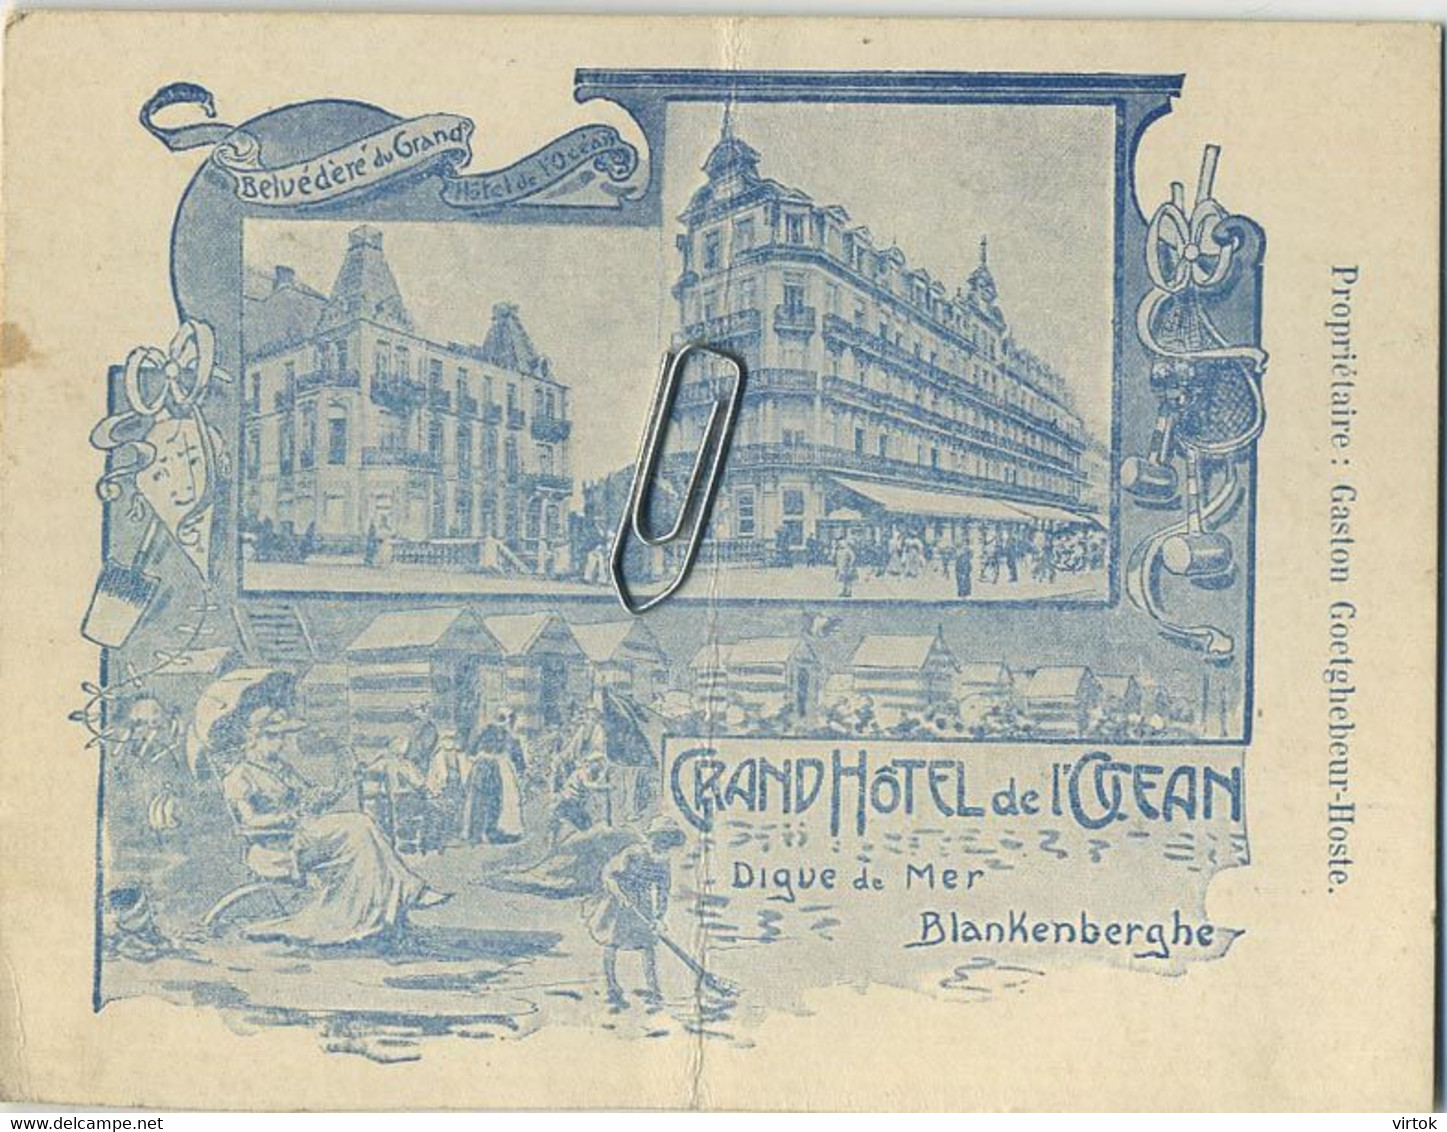 Blankenberge :  Grand Hotel De L'ocean :  Menu 1910  ( See Scan For Detail ) 13 X 10 Cm - Menus